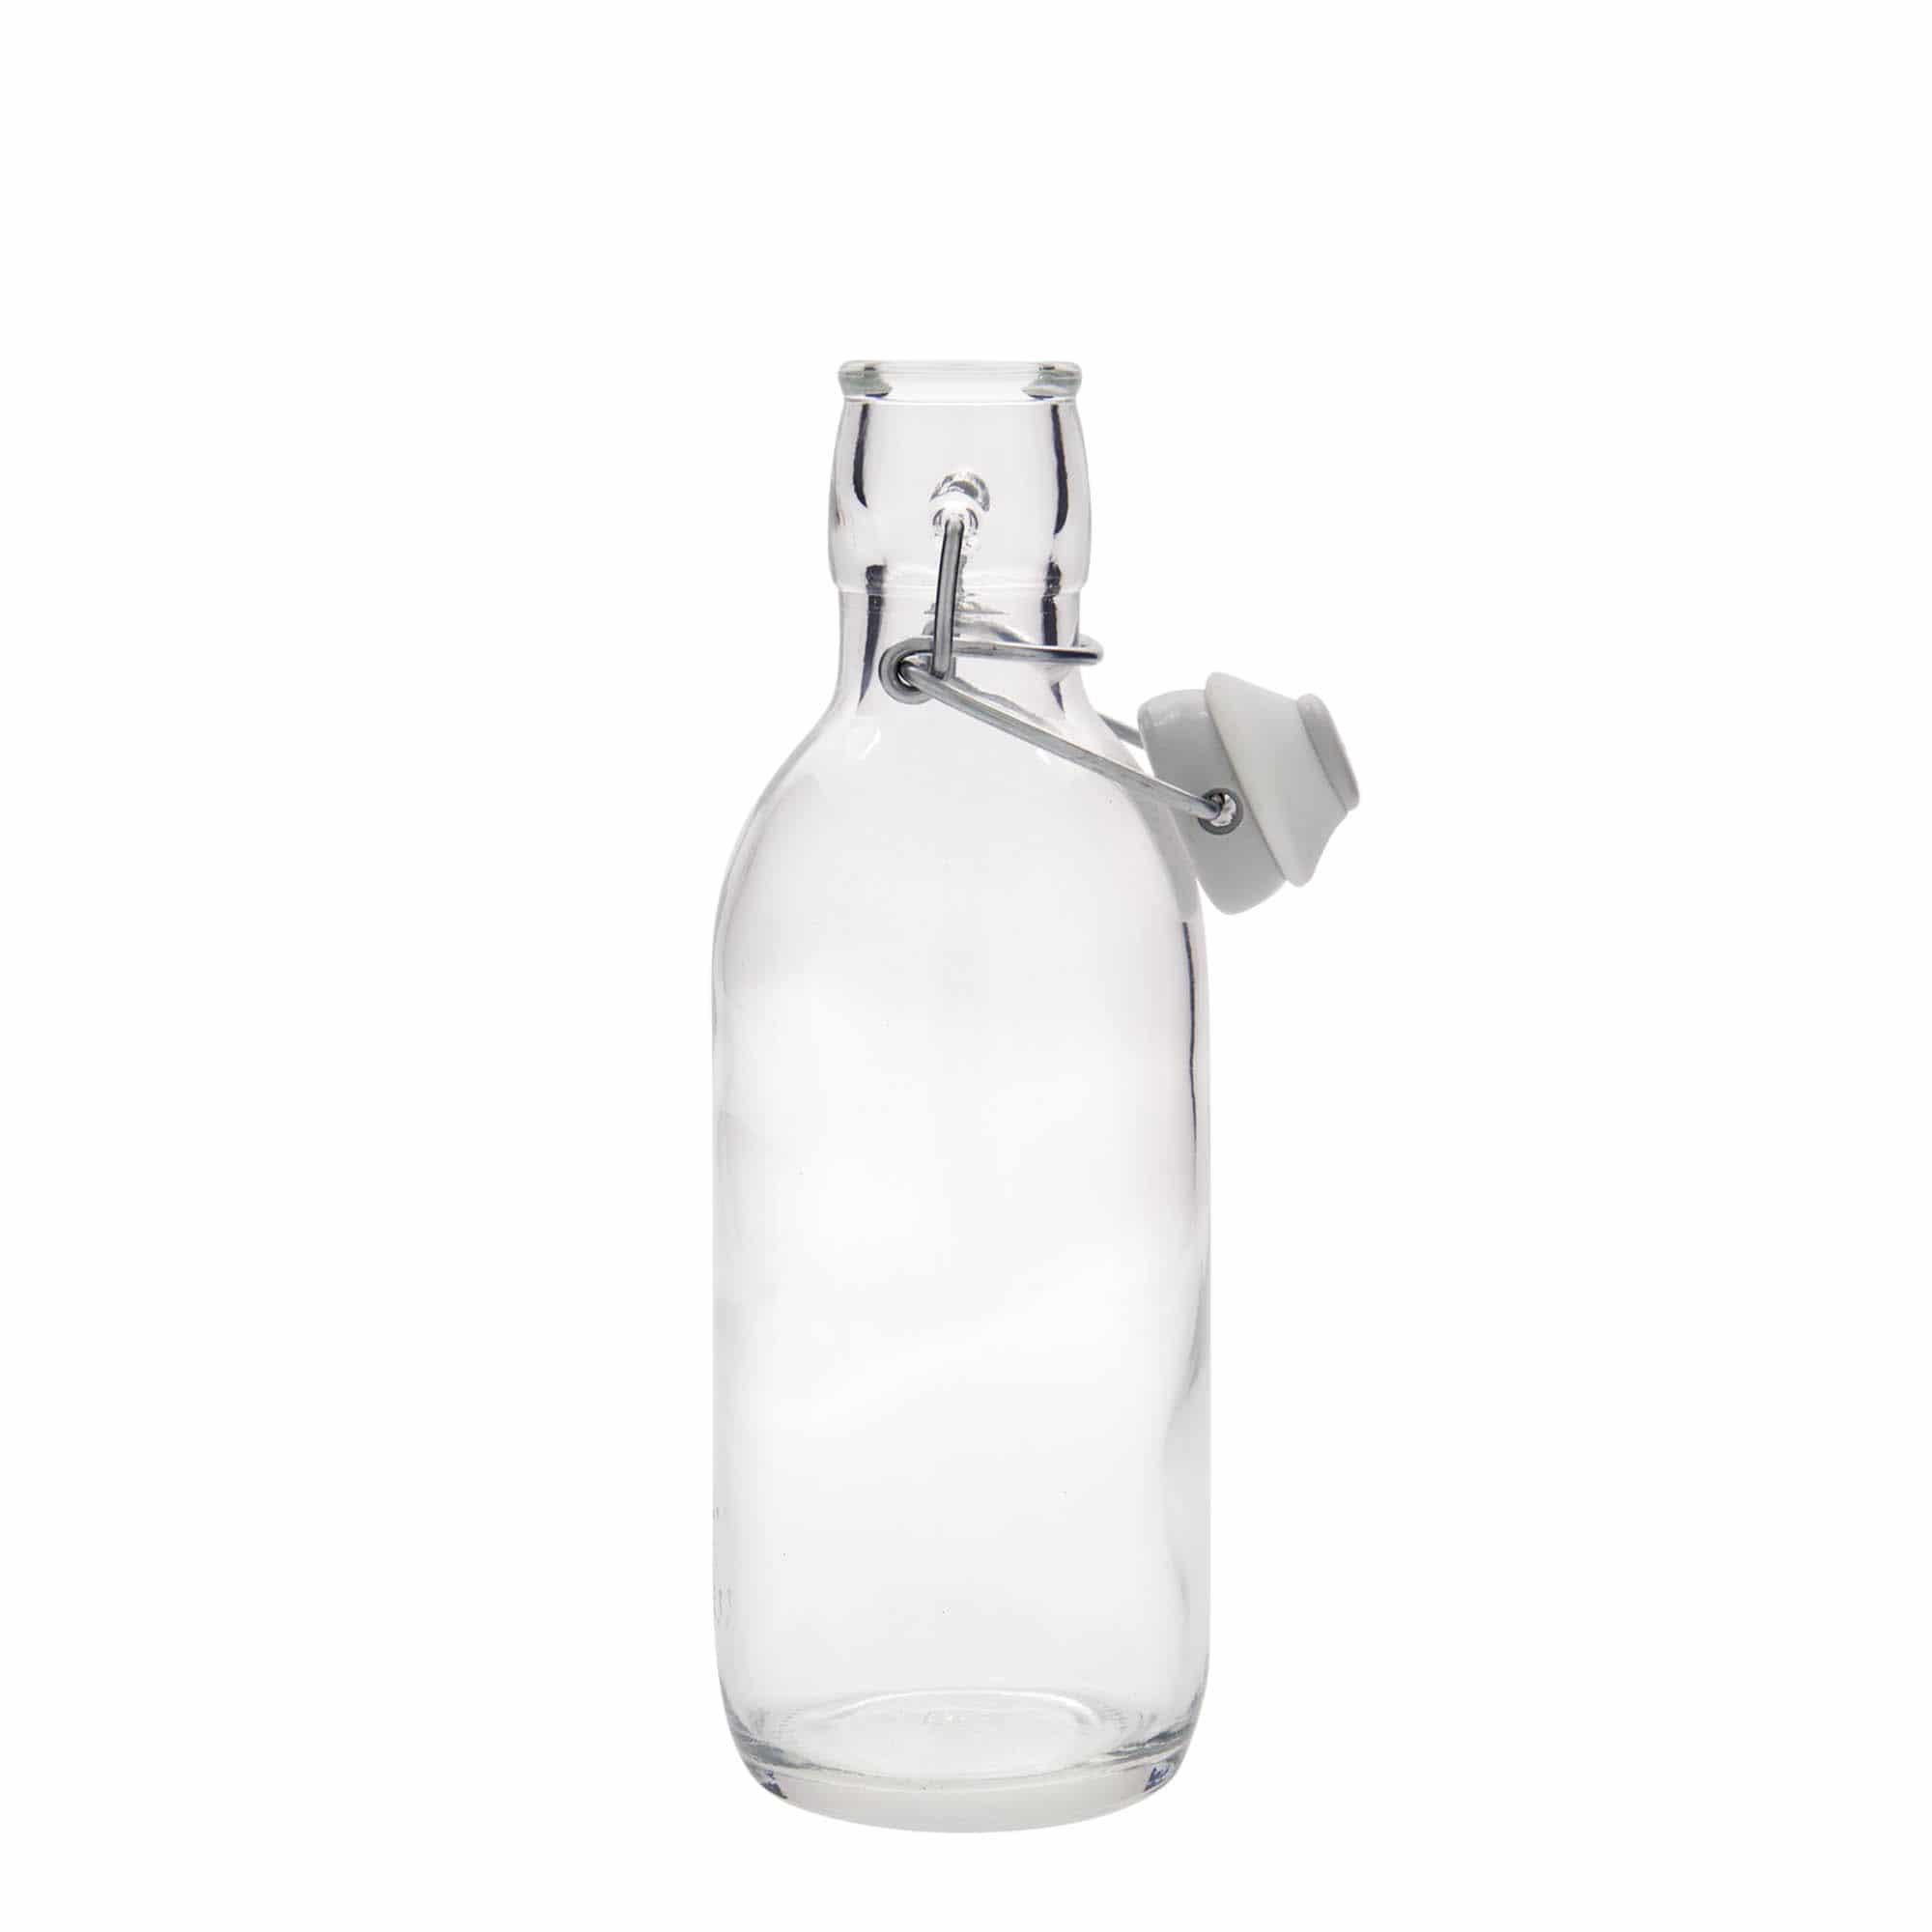 500 ml glass bottle 'Emilia', closure: swing top